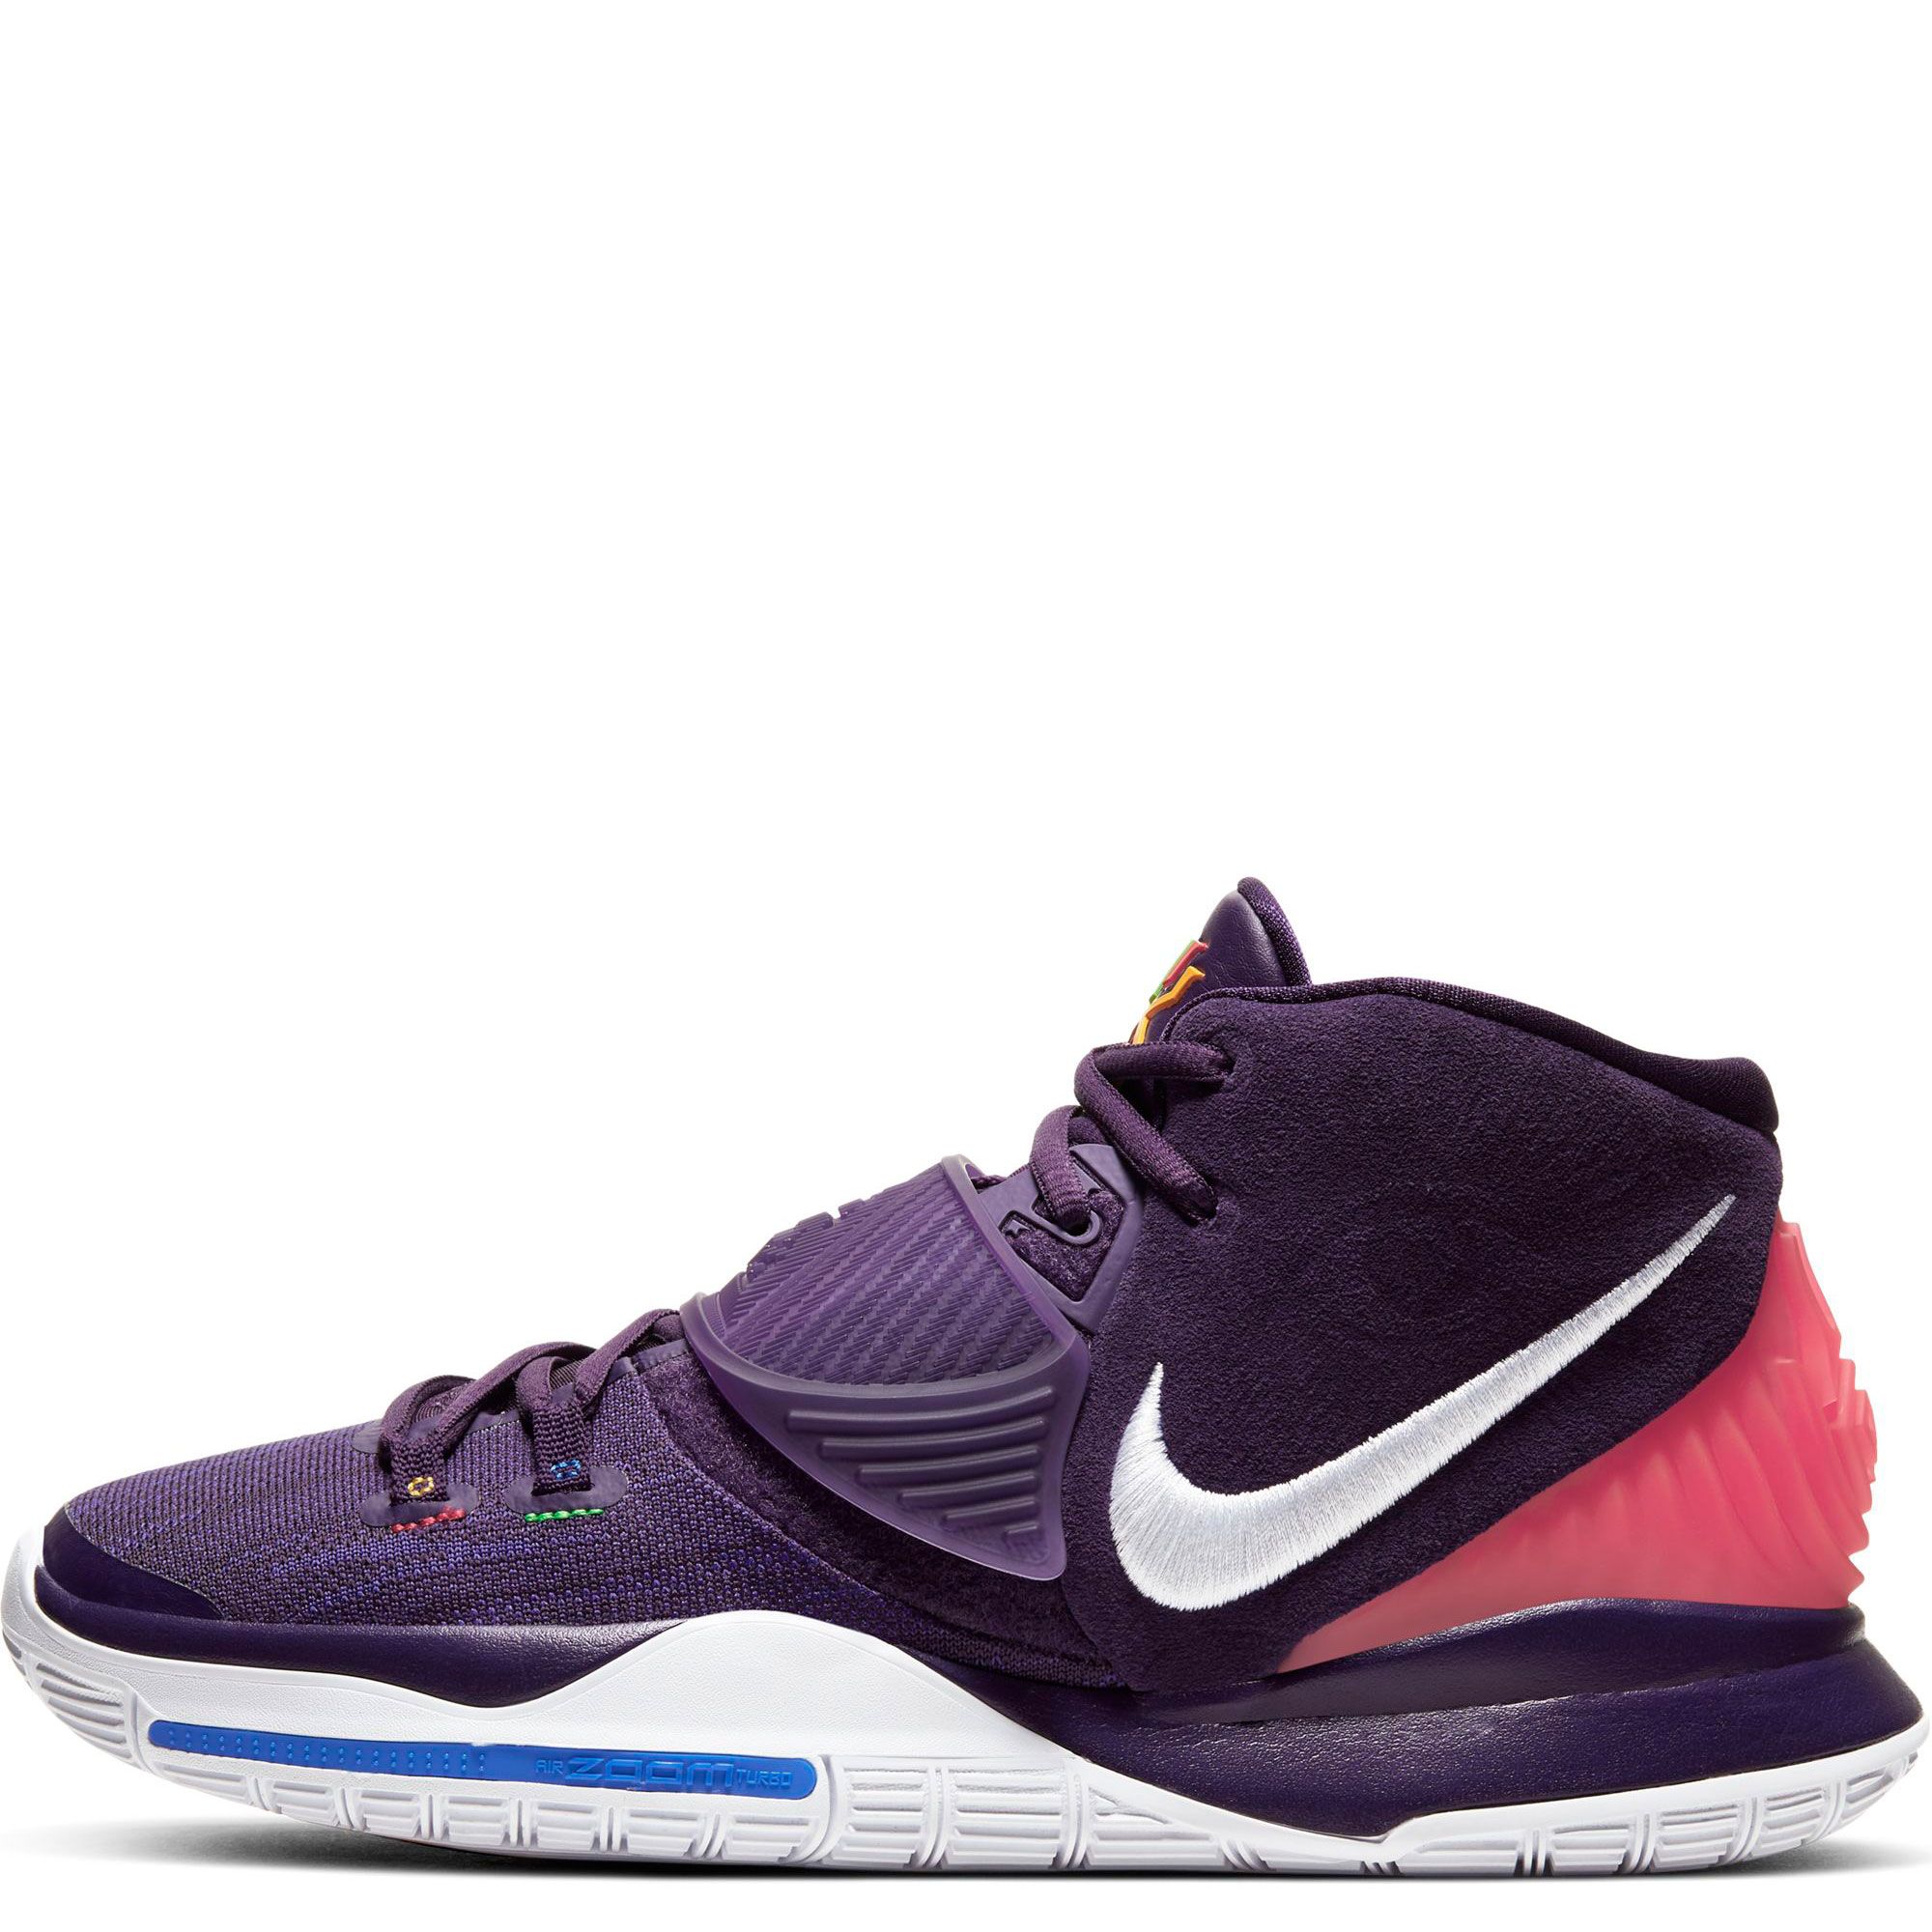 kyrie 6 purple shoes